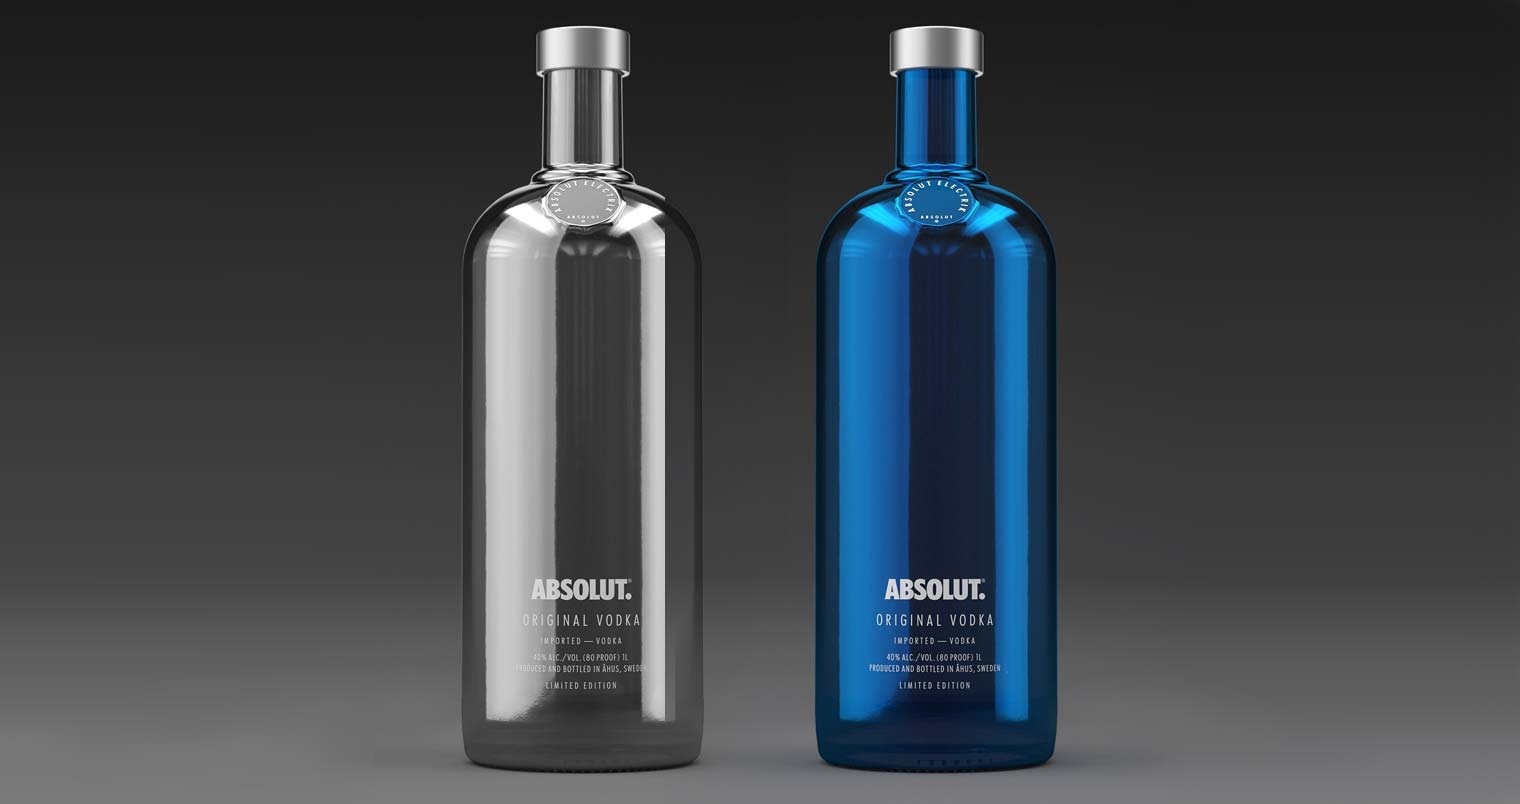 Limited Edition Absolut Electrik Bottles